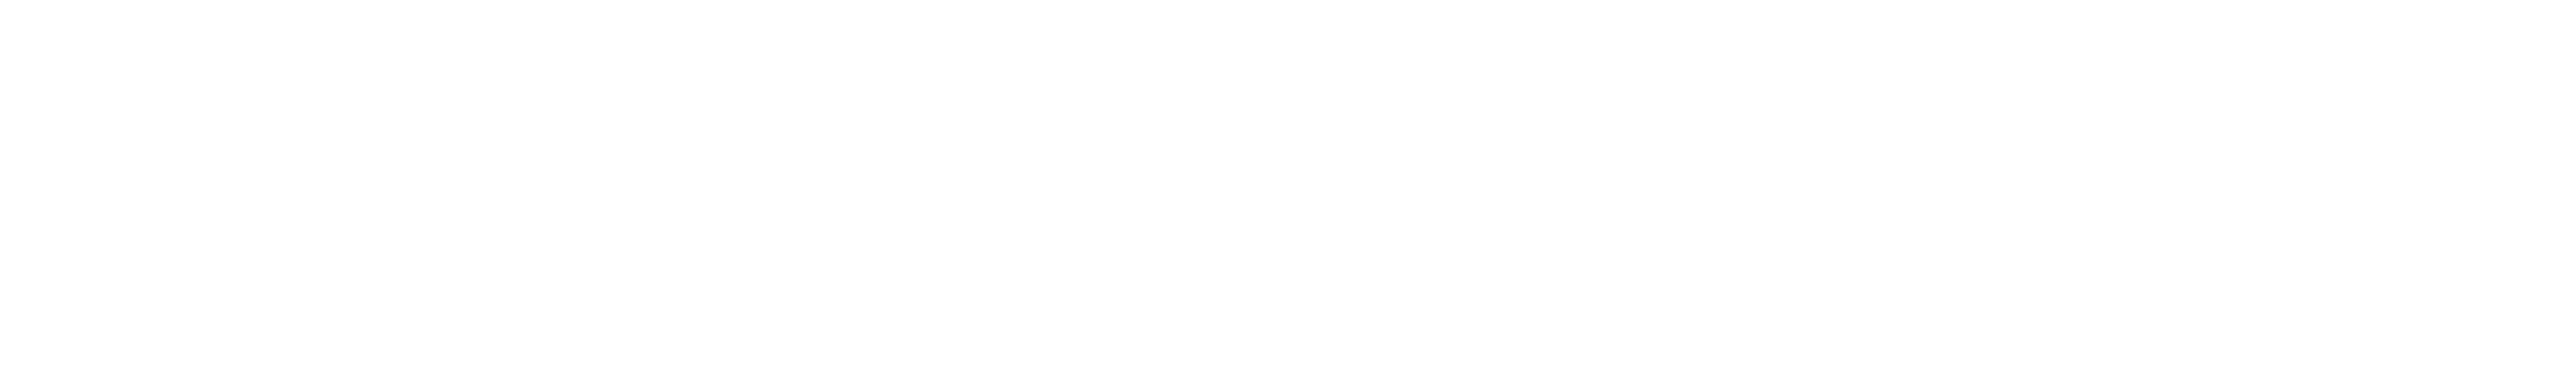 Bio-Works logo